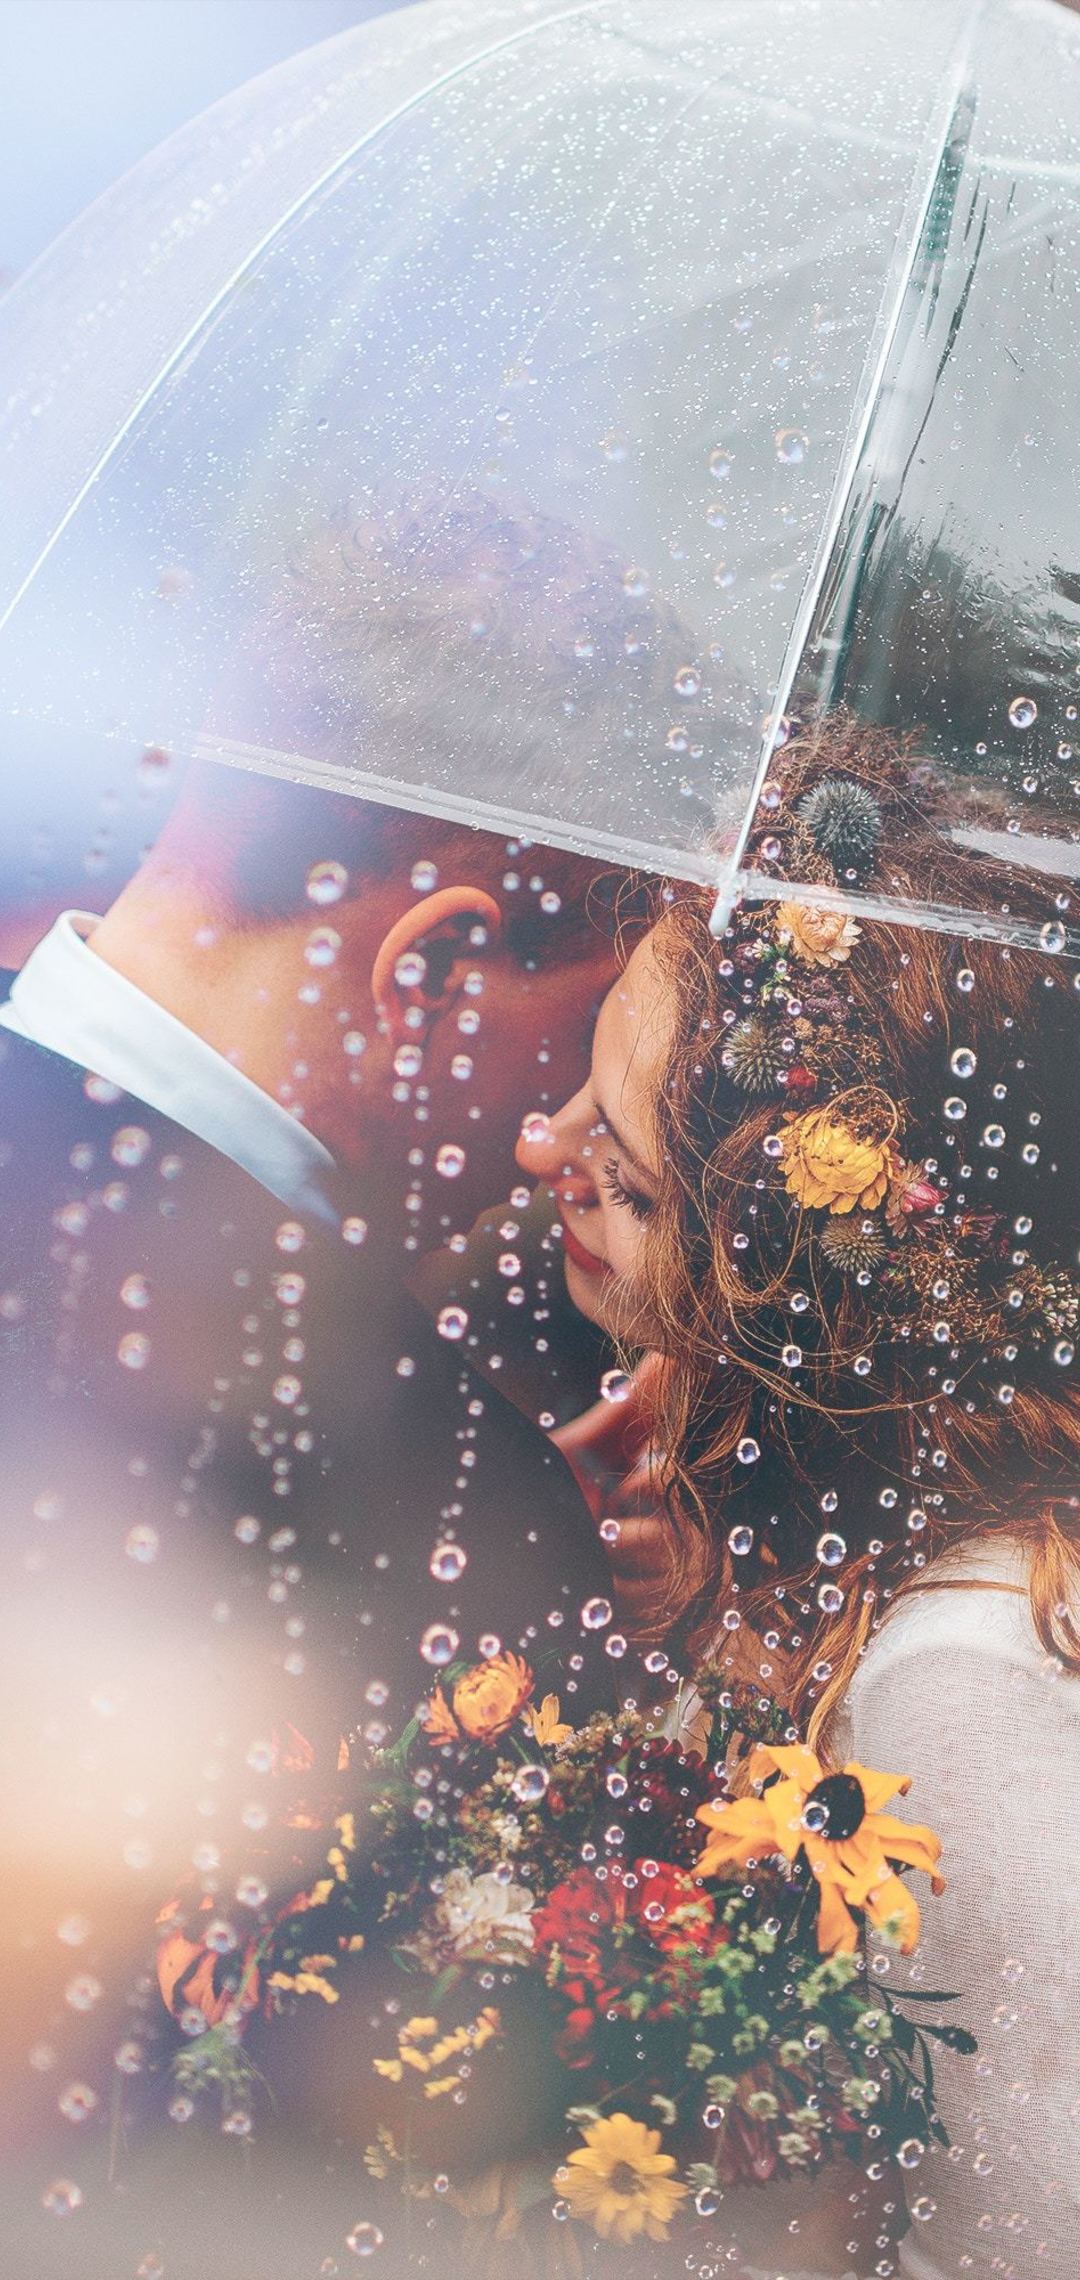 Fantastis 18+ Wallpaper Couple In The Rain - Joen Wallpaper